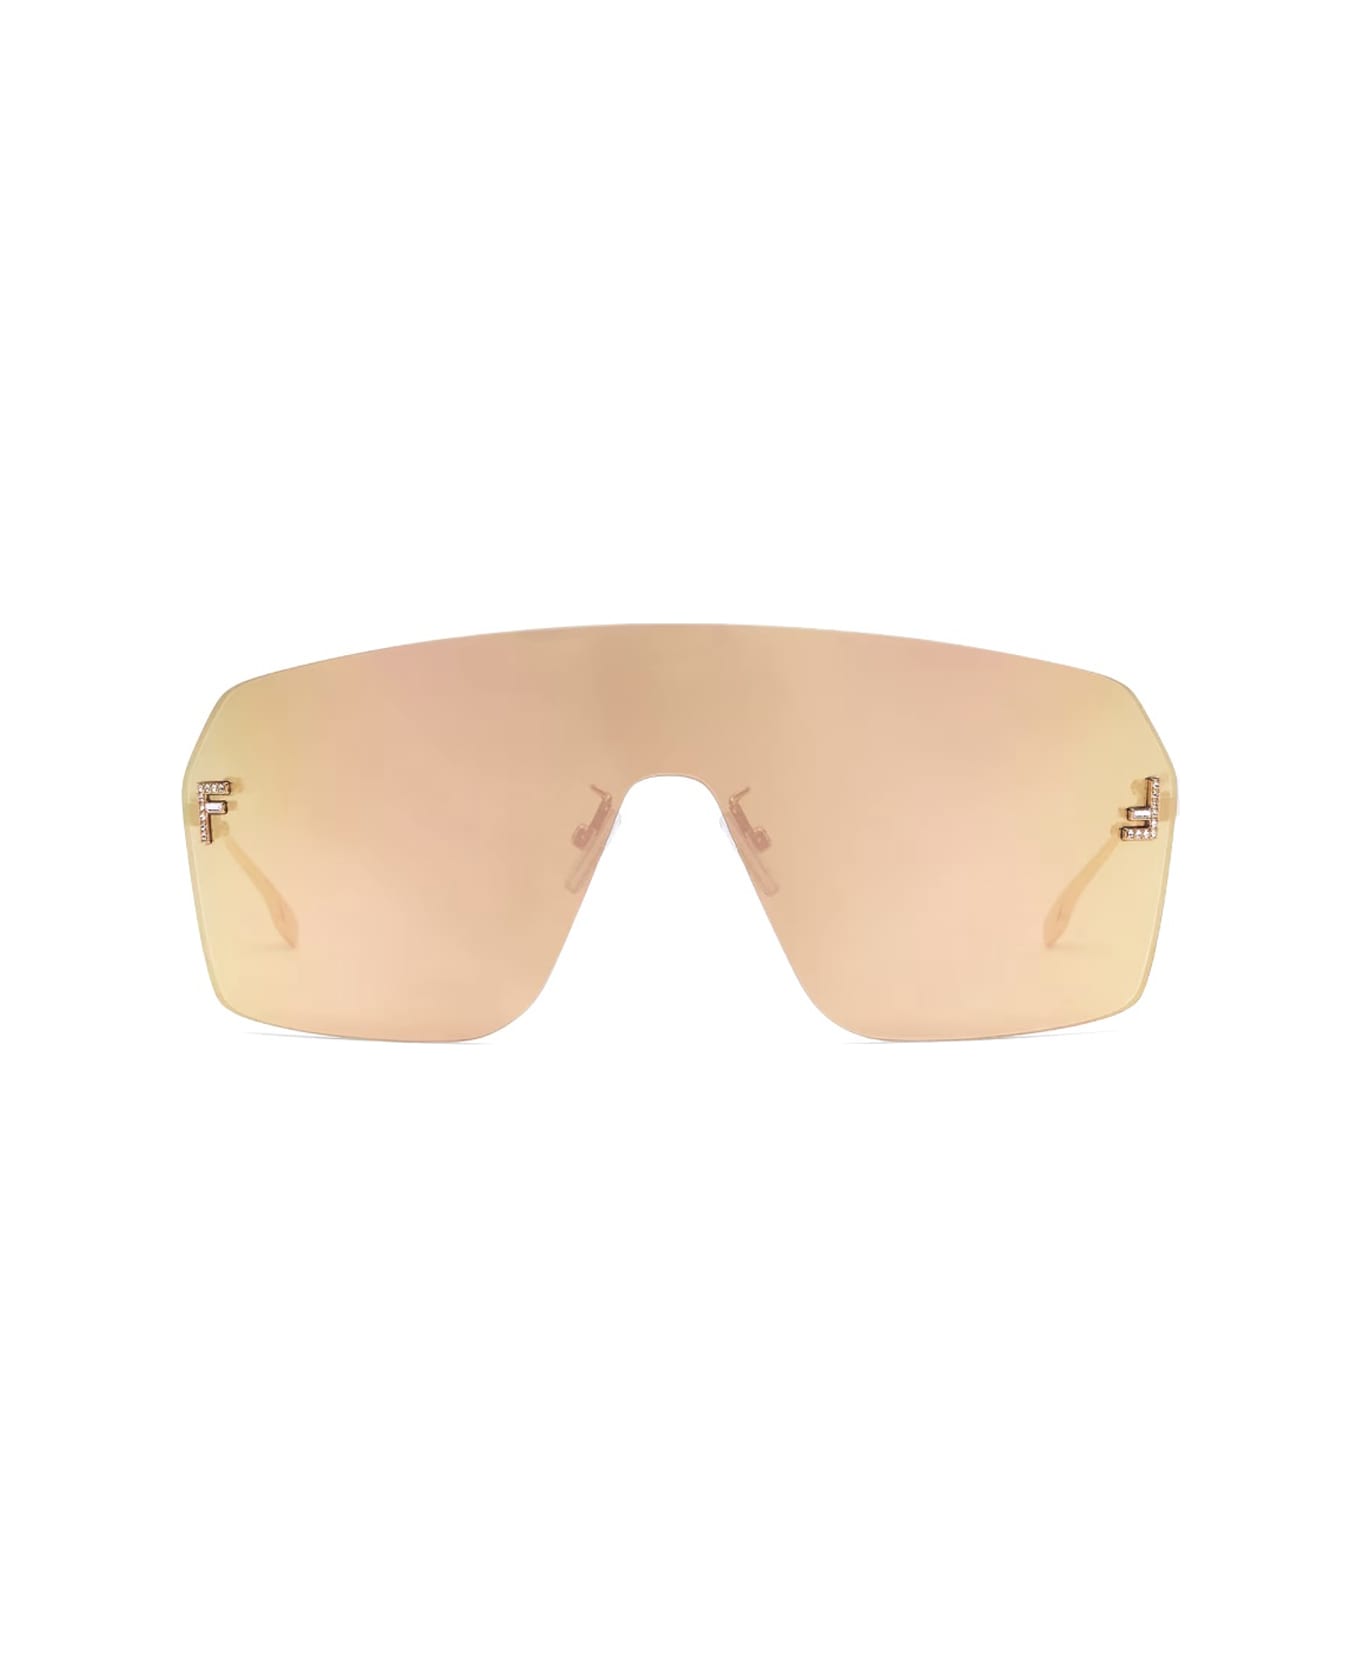 Fendi Eyewear Fe4121us 28g Sunglasses - Oro